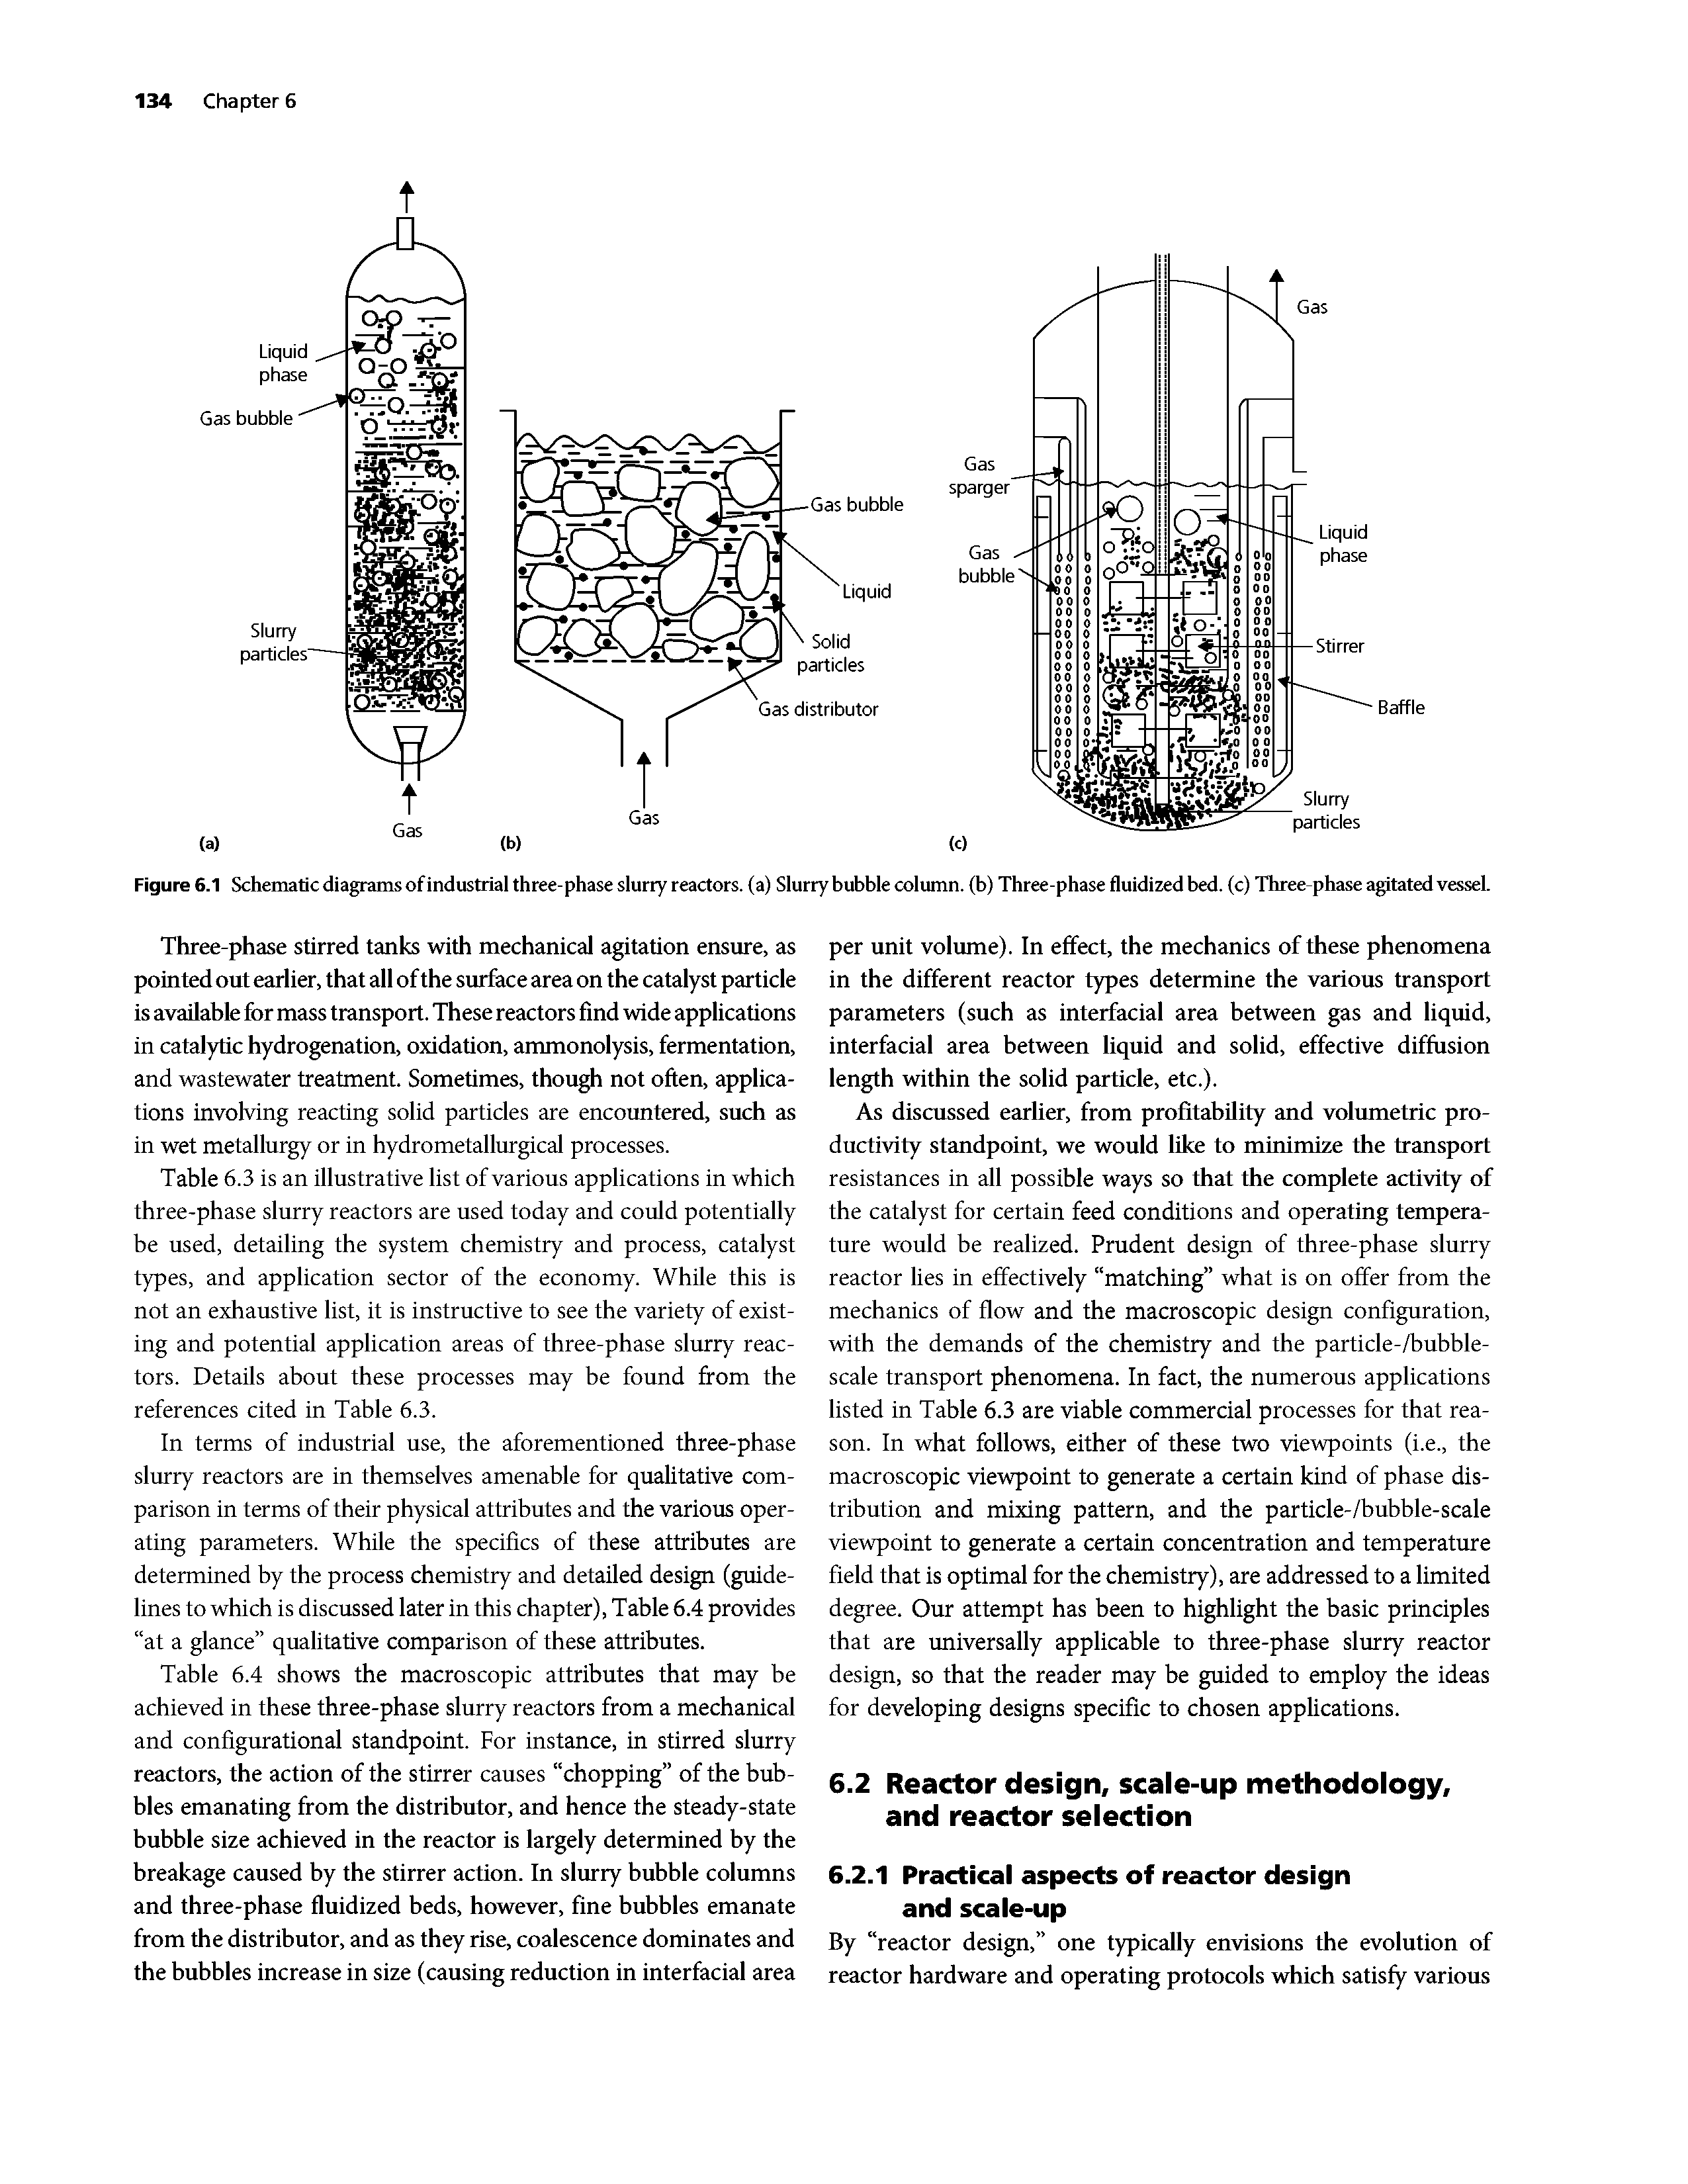 Figure 6.1 Schematic diagrams of industrial three-phase slurry reactors, (a) Slurry bubble column, (b) Three-phase fluidized bed. (c) Three-phase agitated vessel...